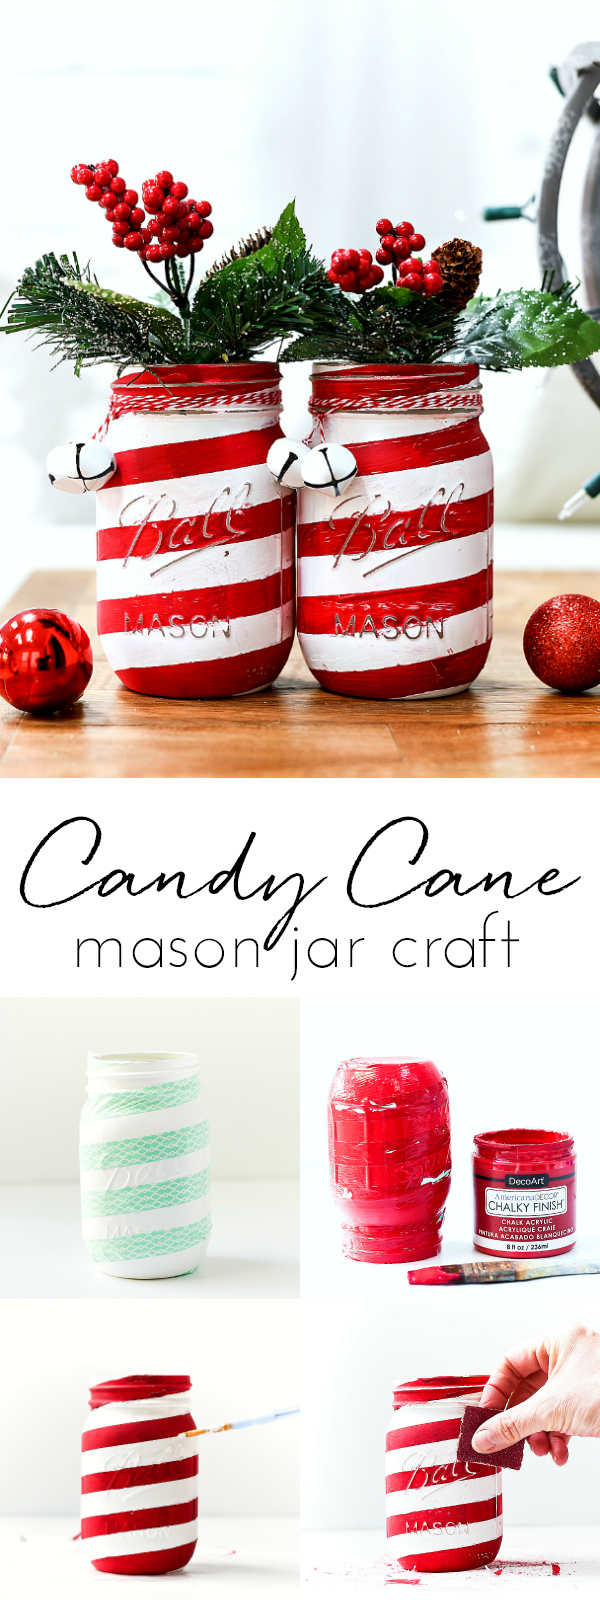 Candy Cane Mason Jar Craft Project - How To Make Candy Cane Mason Jar